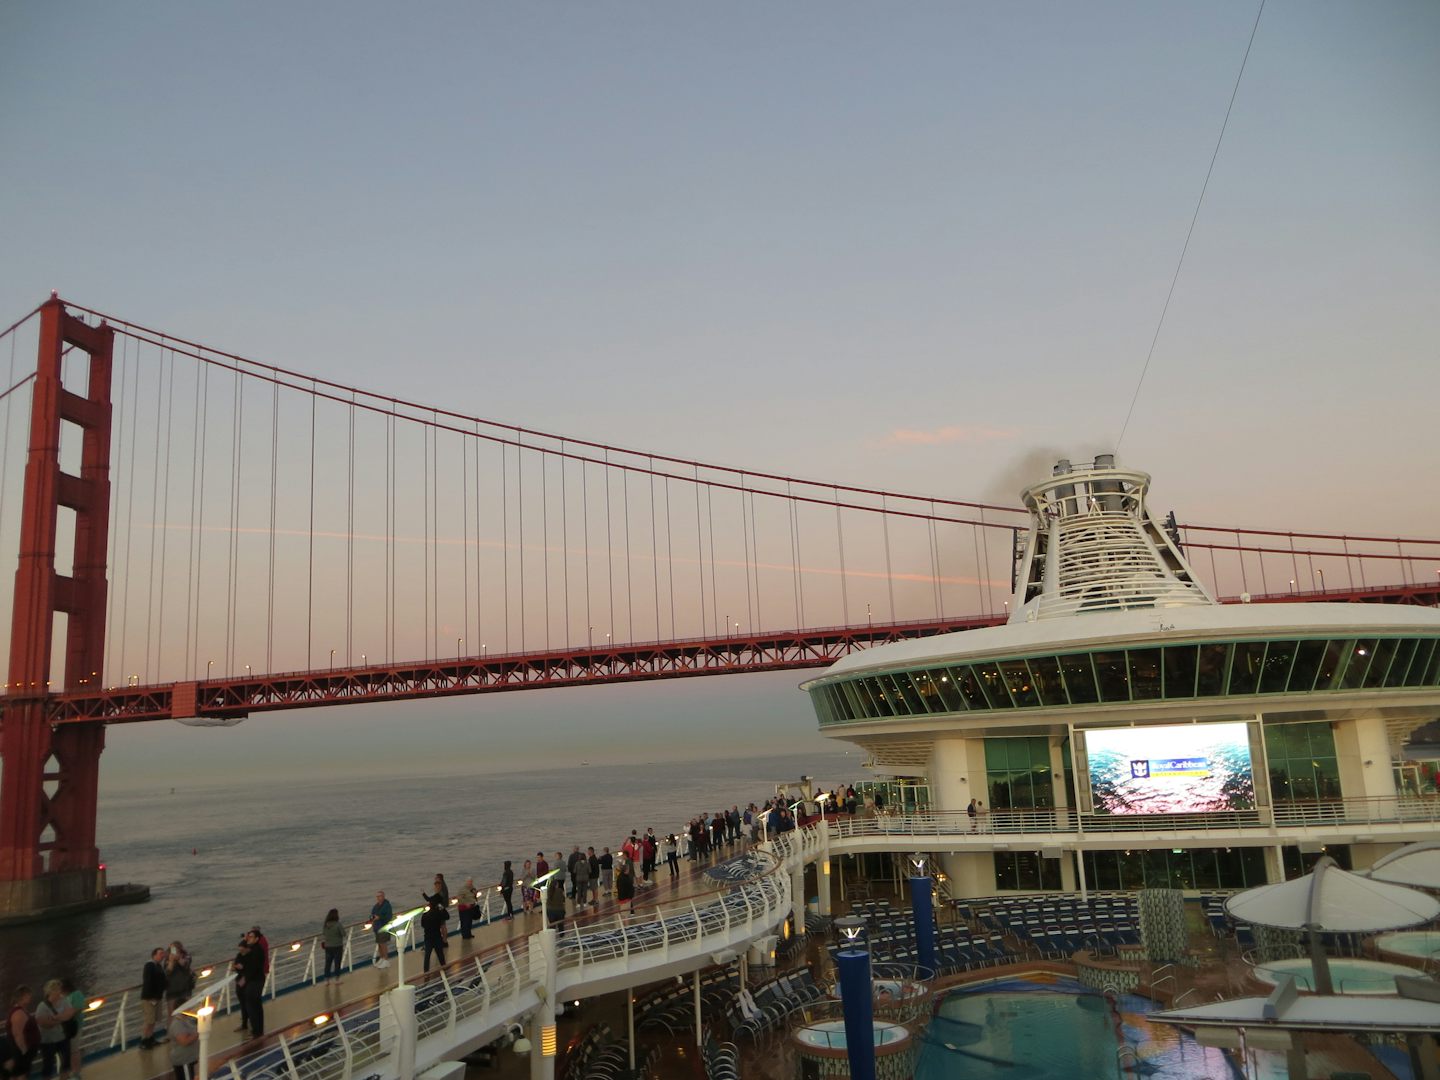 Beautiful view of ship at Golden Gate Bridge.